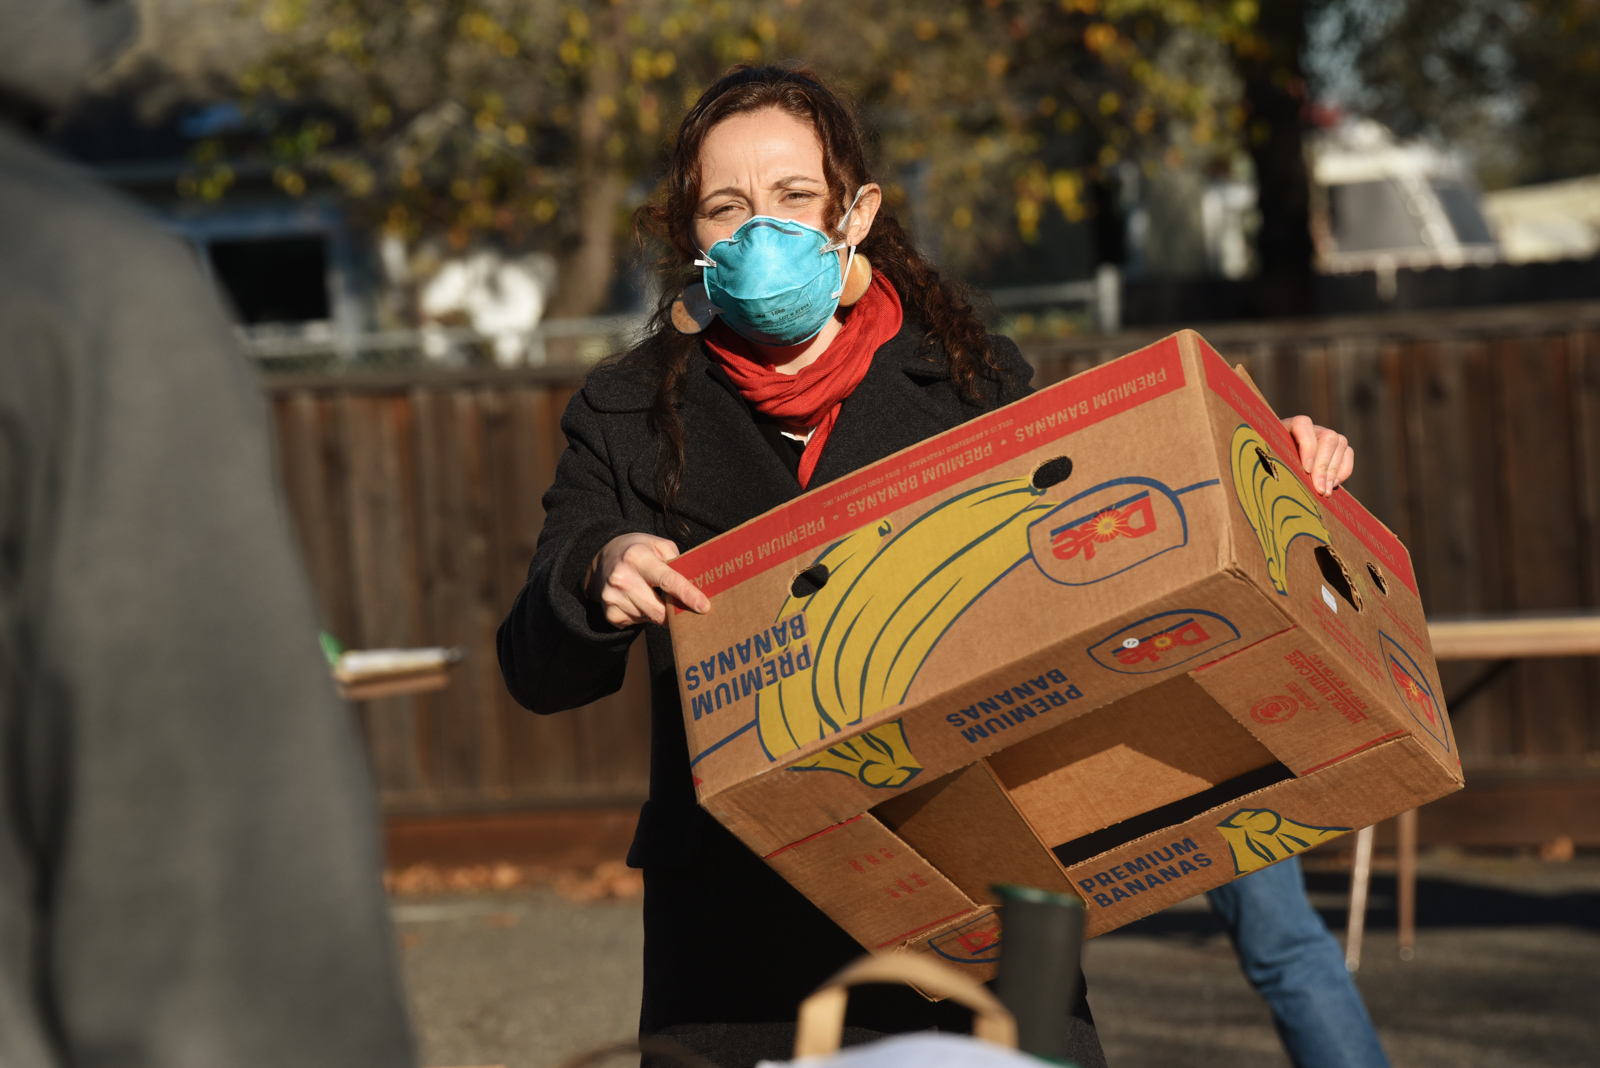 California Homemakers Association volunteer carrying a cardboard box.